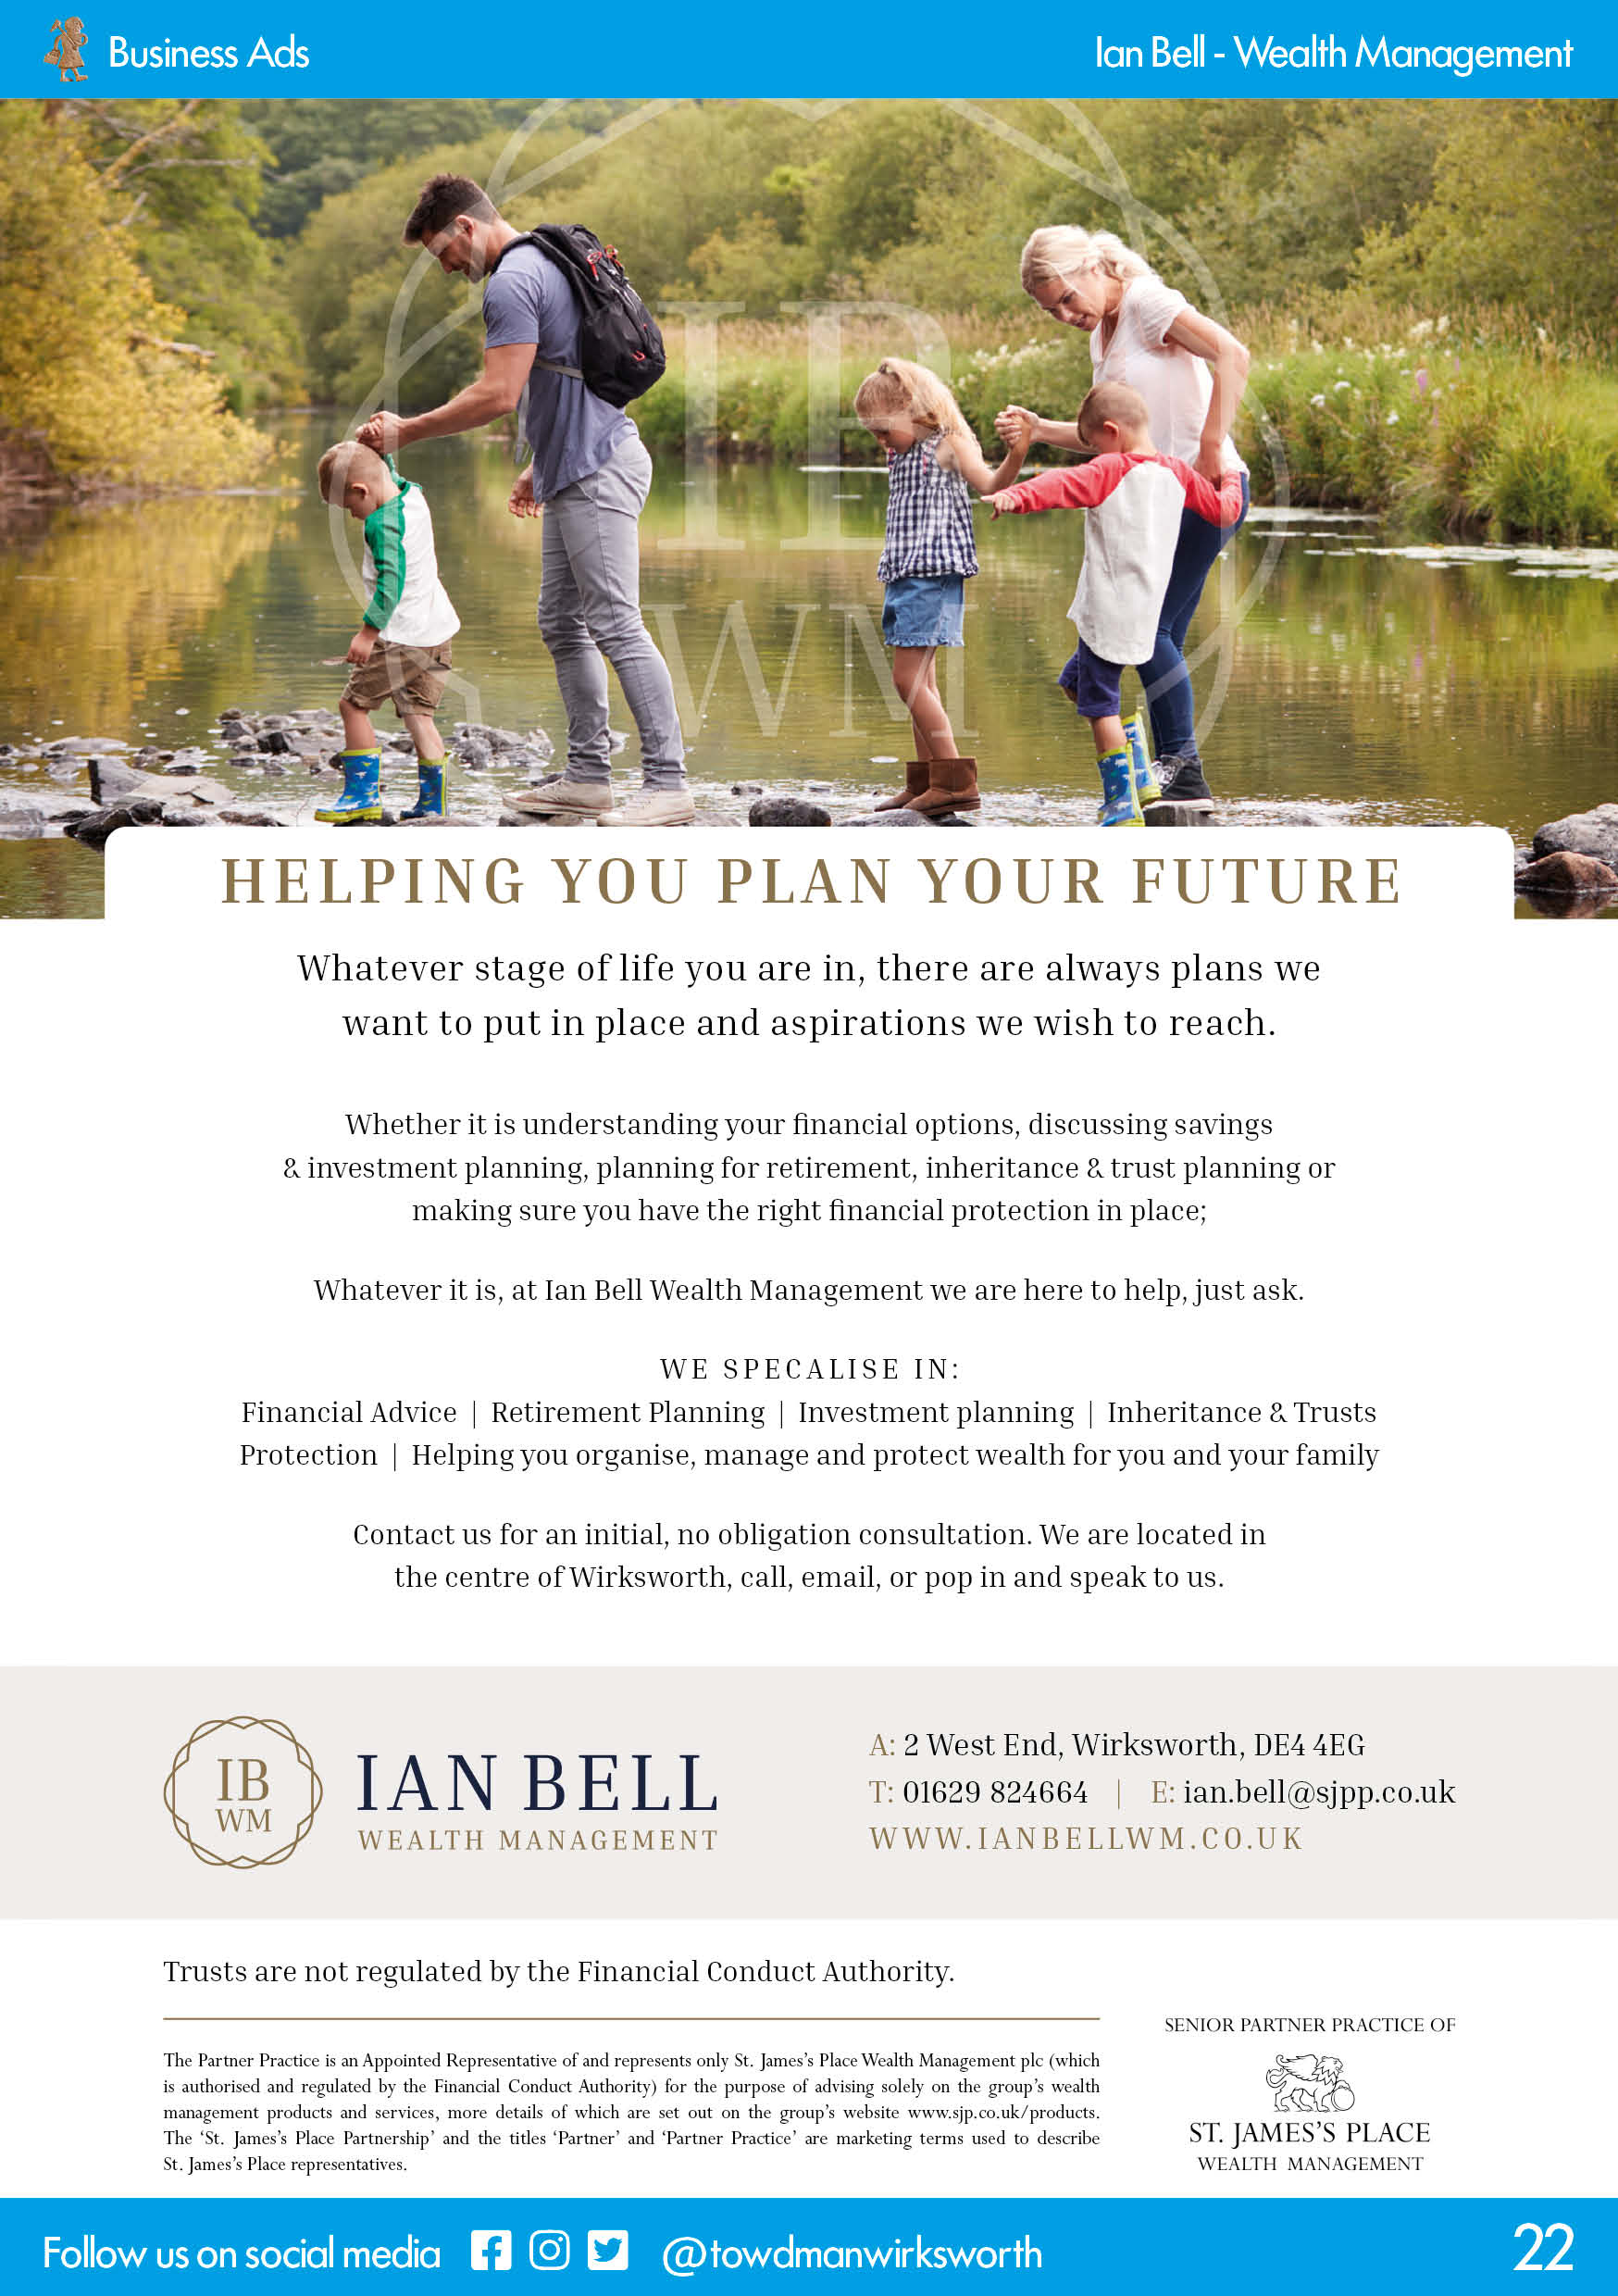 Ian Bell Wealth Management